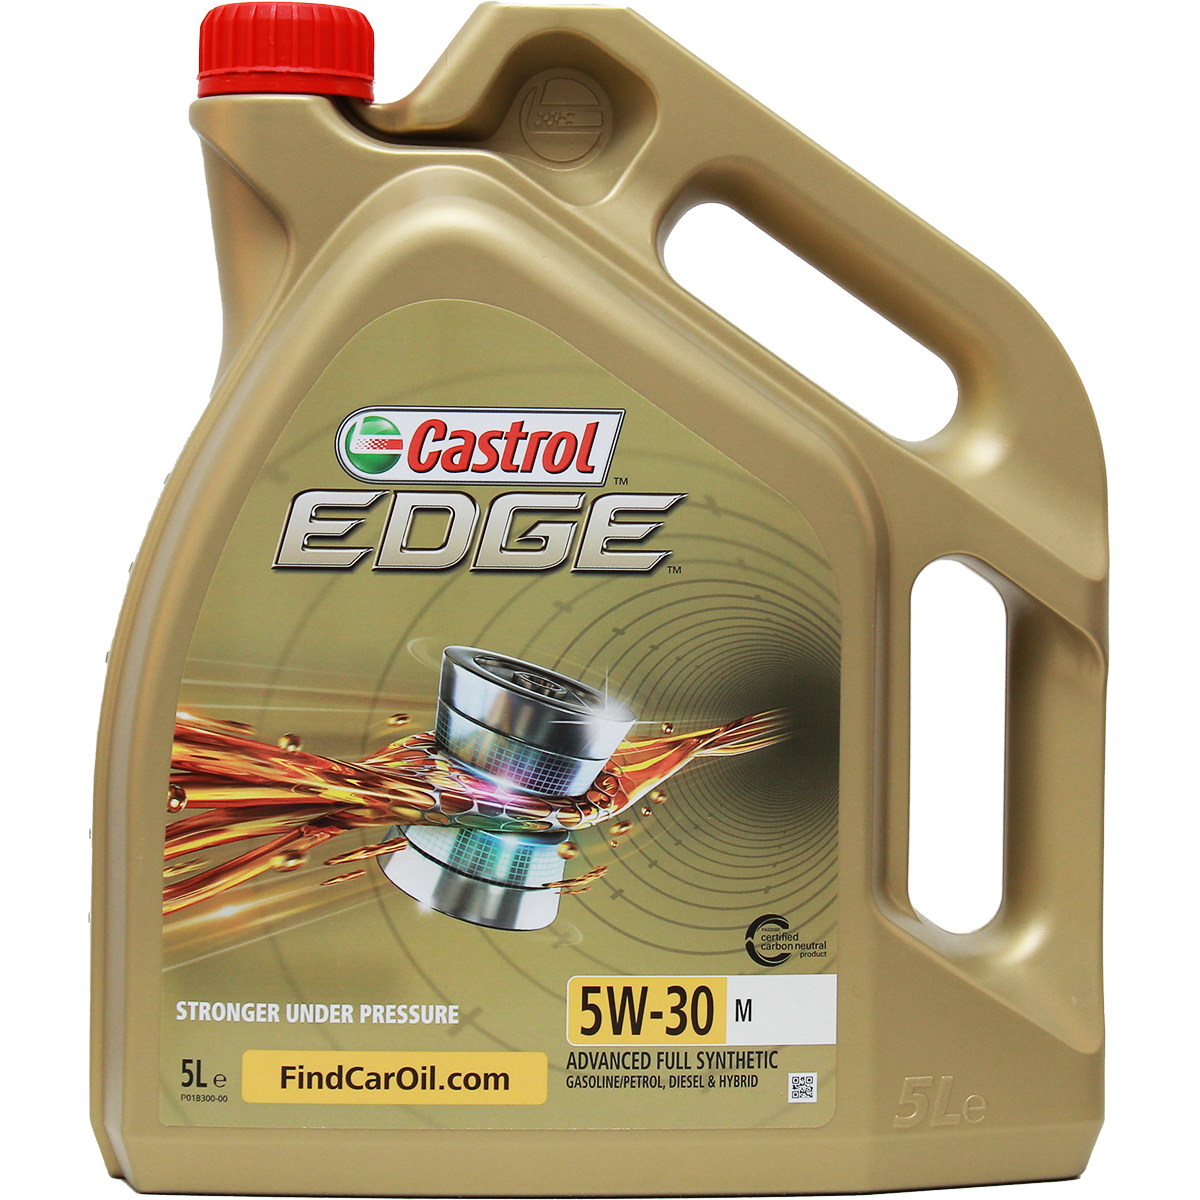 Castrol Edge 5W-30 M 5+4 Liter